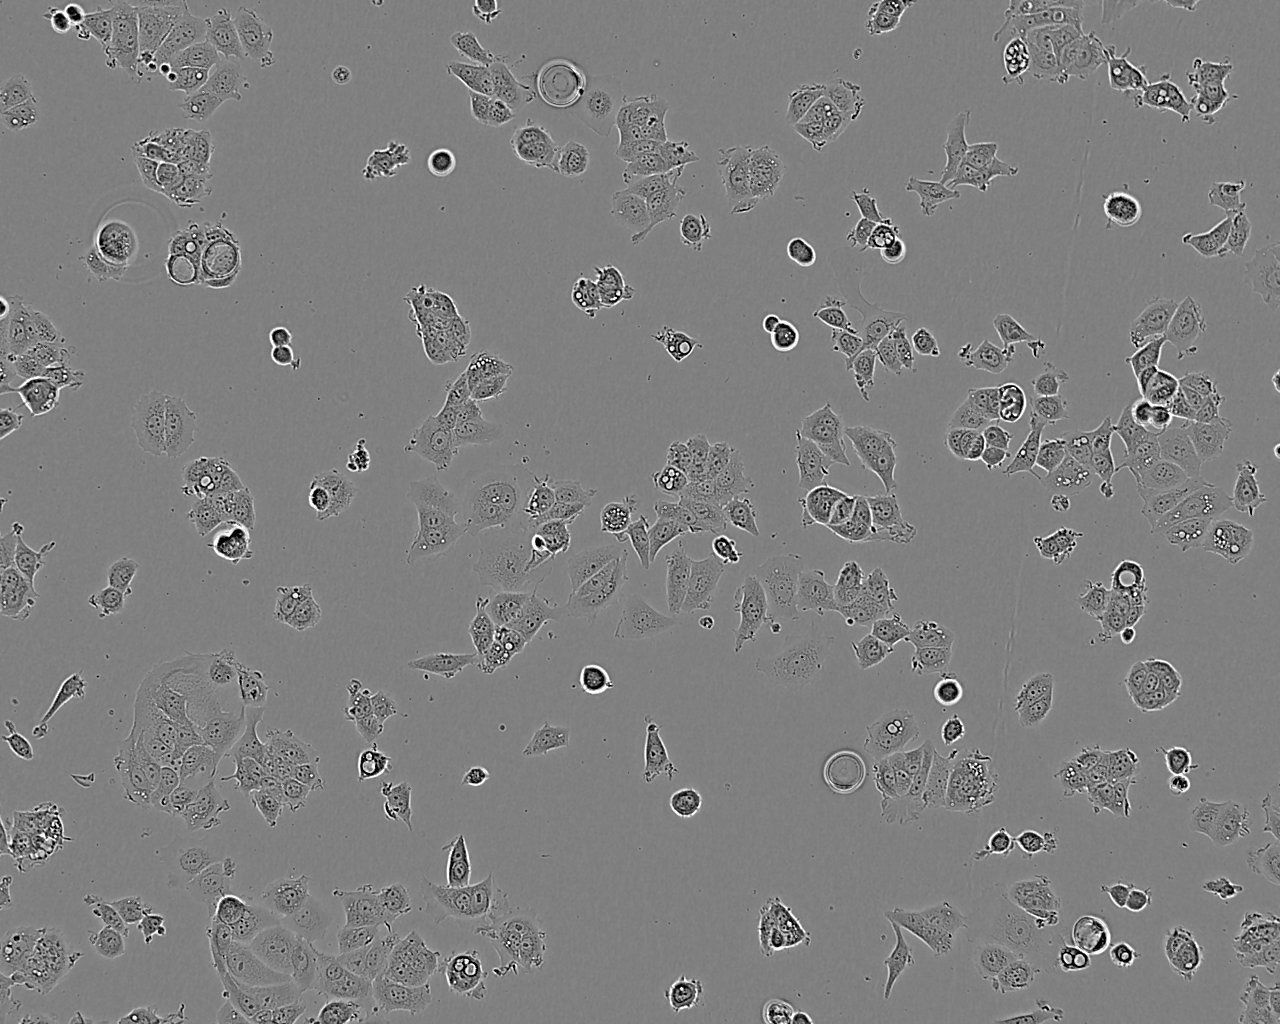 PANC-1 Cells|人胰腺癌需消化细胞系